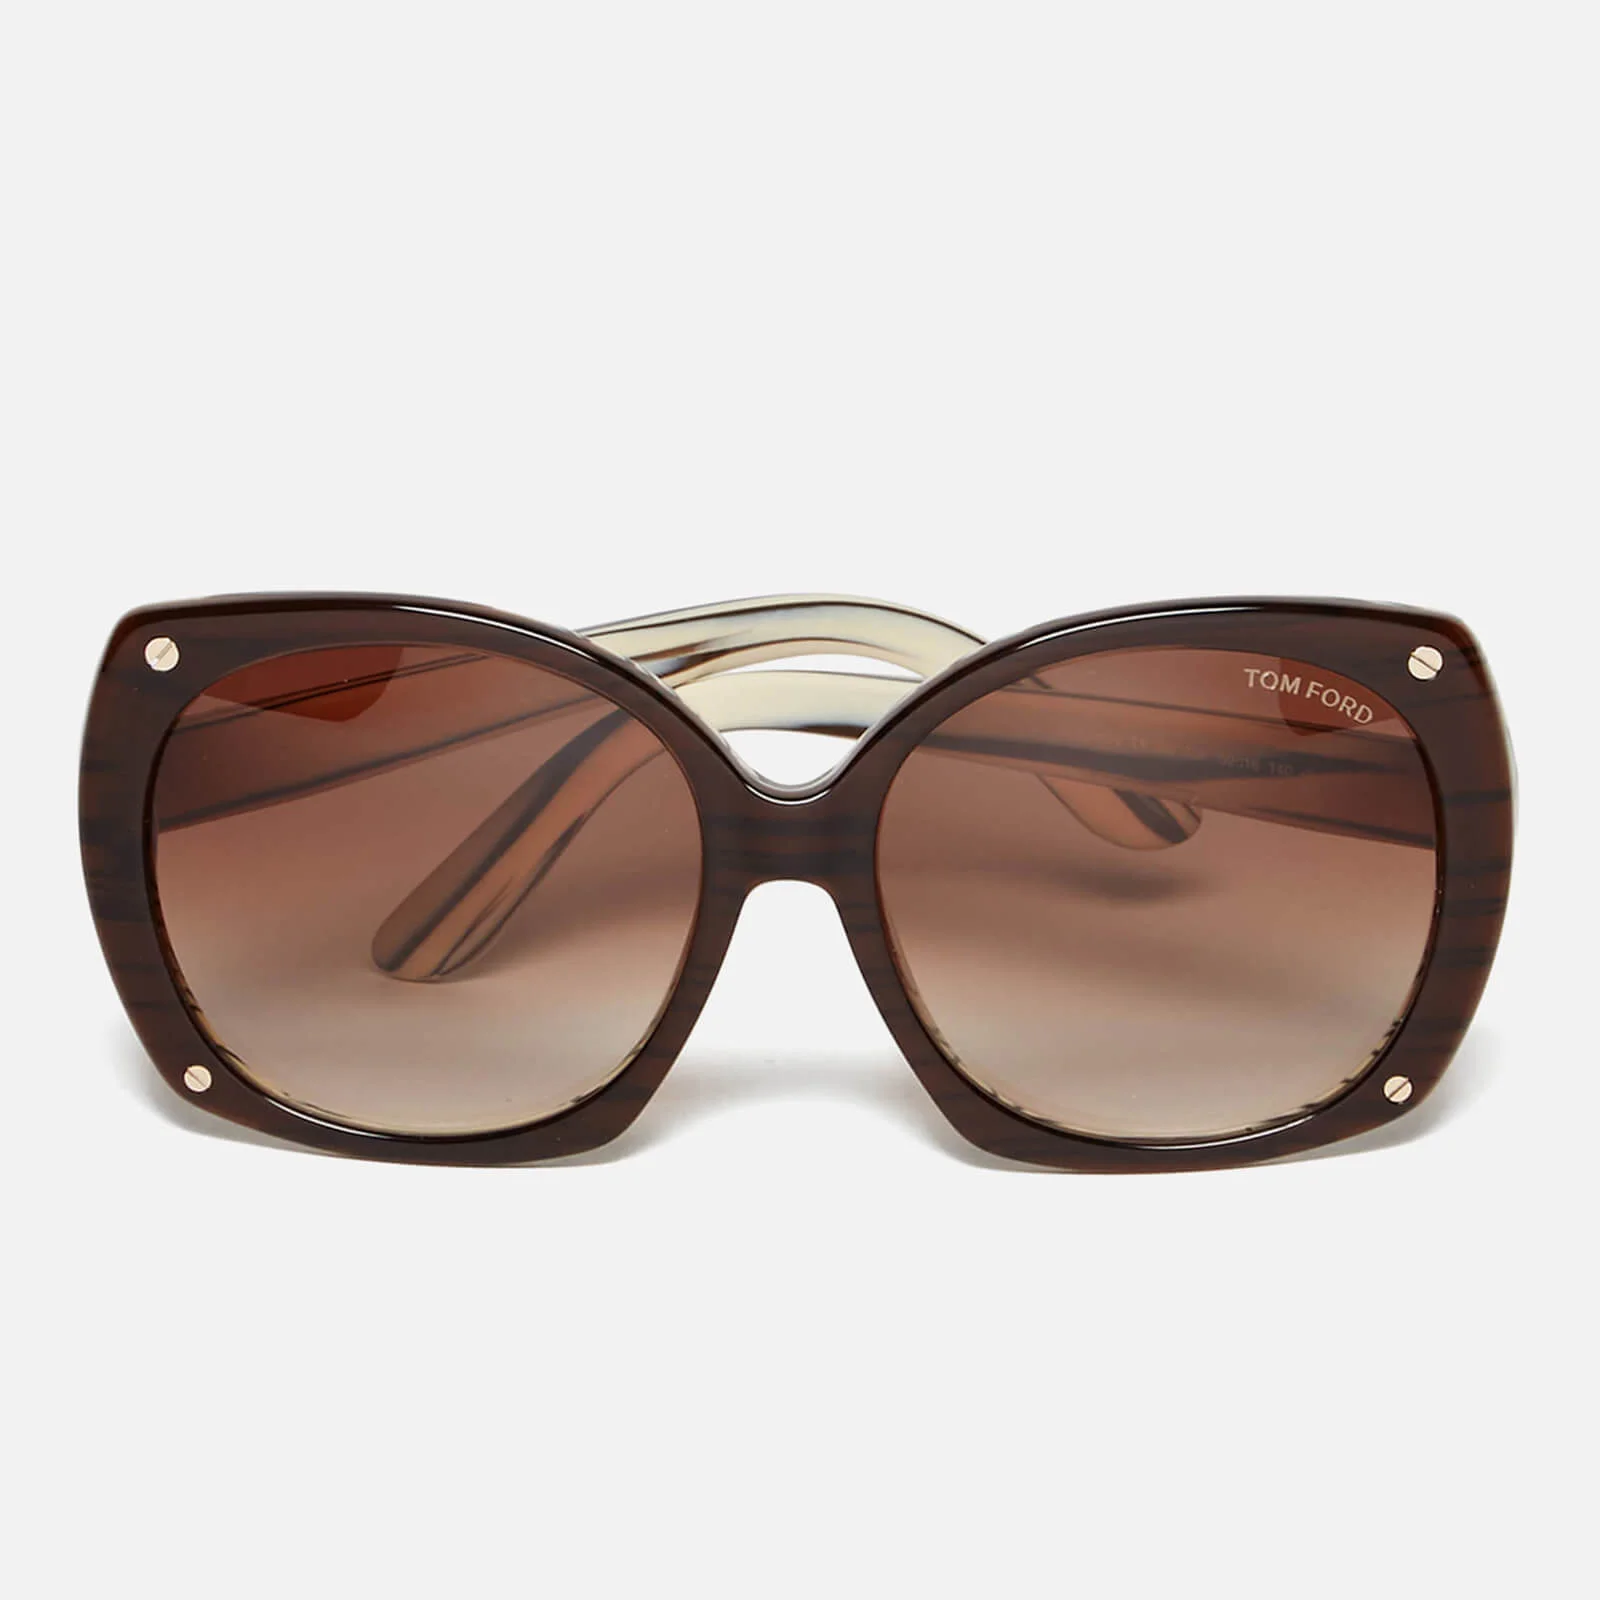 Tom Ford Women's Gabriella Sunglasses - Brown Image 1